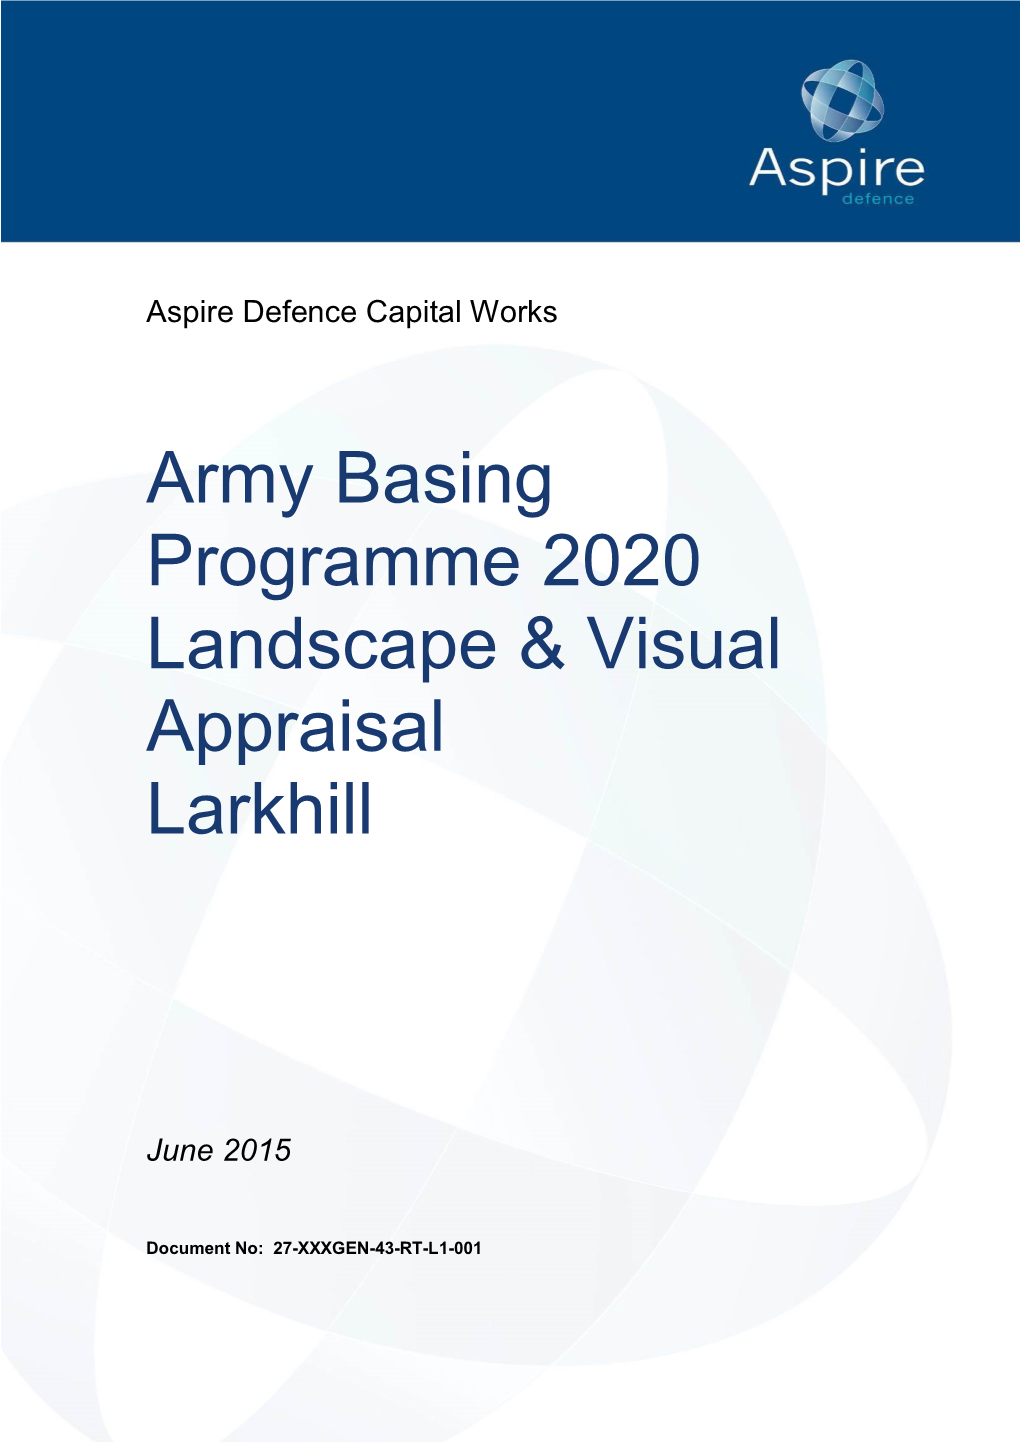 Army Basing Programme 2020 Landscape & Visual Appraisal Larkhill